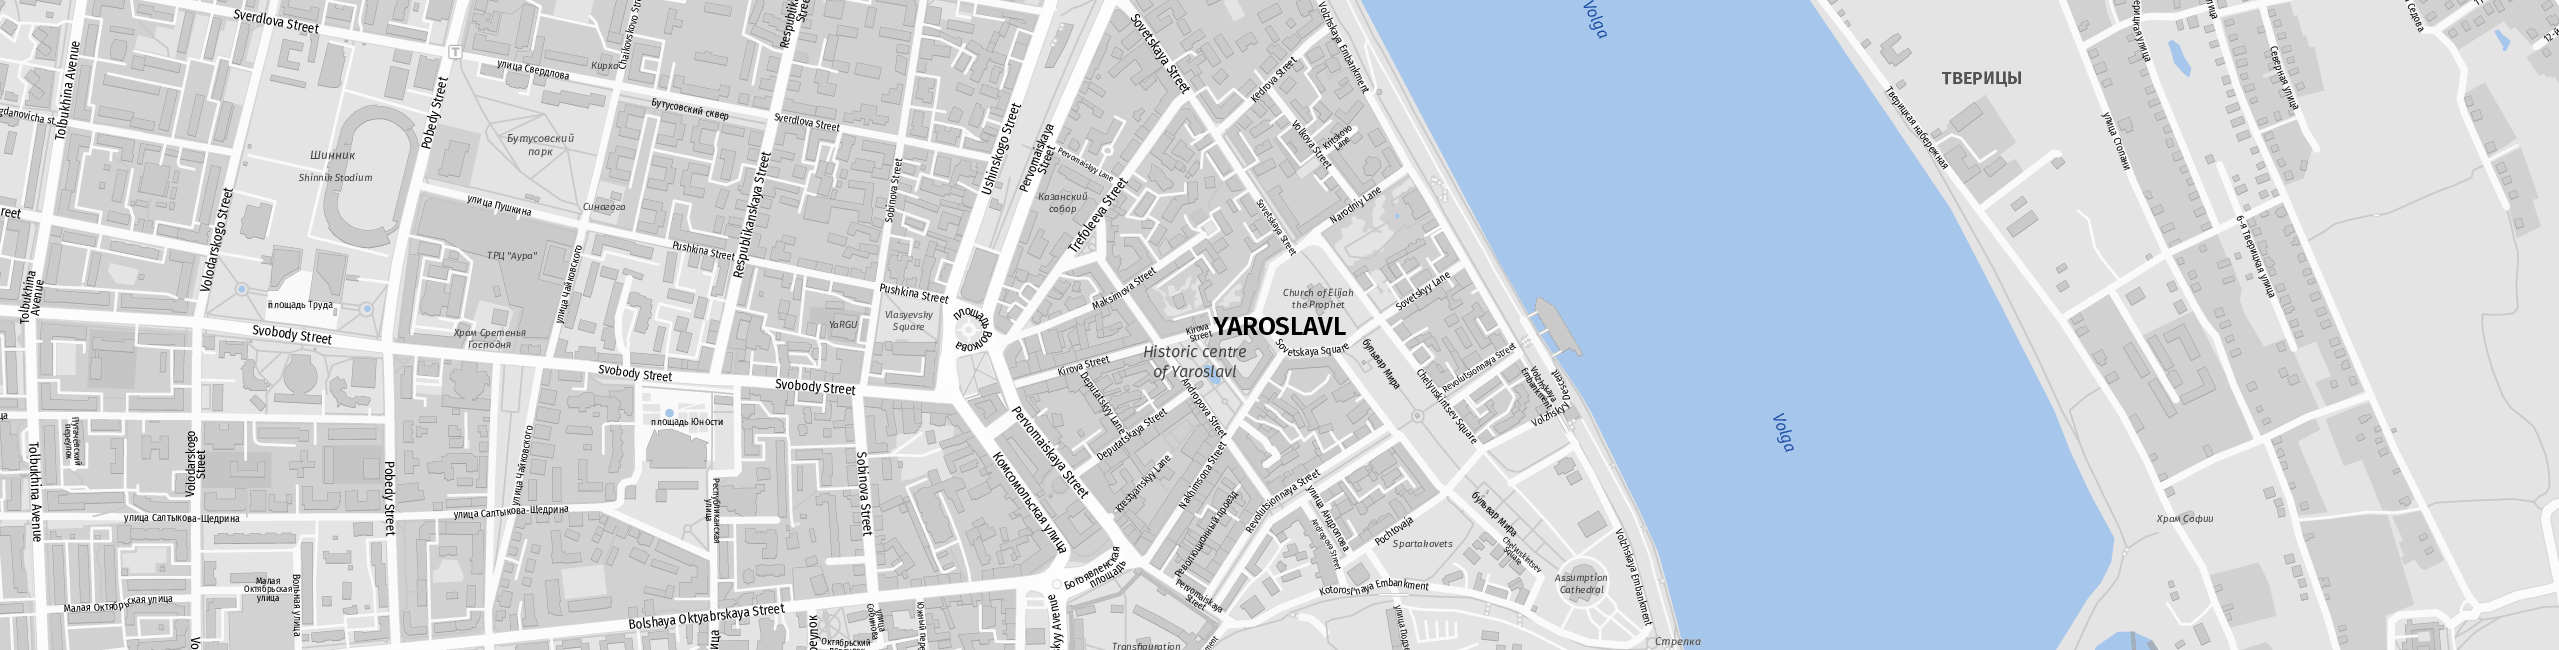 Stadtplan Yaroslavl zum Downloaden.